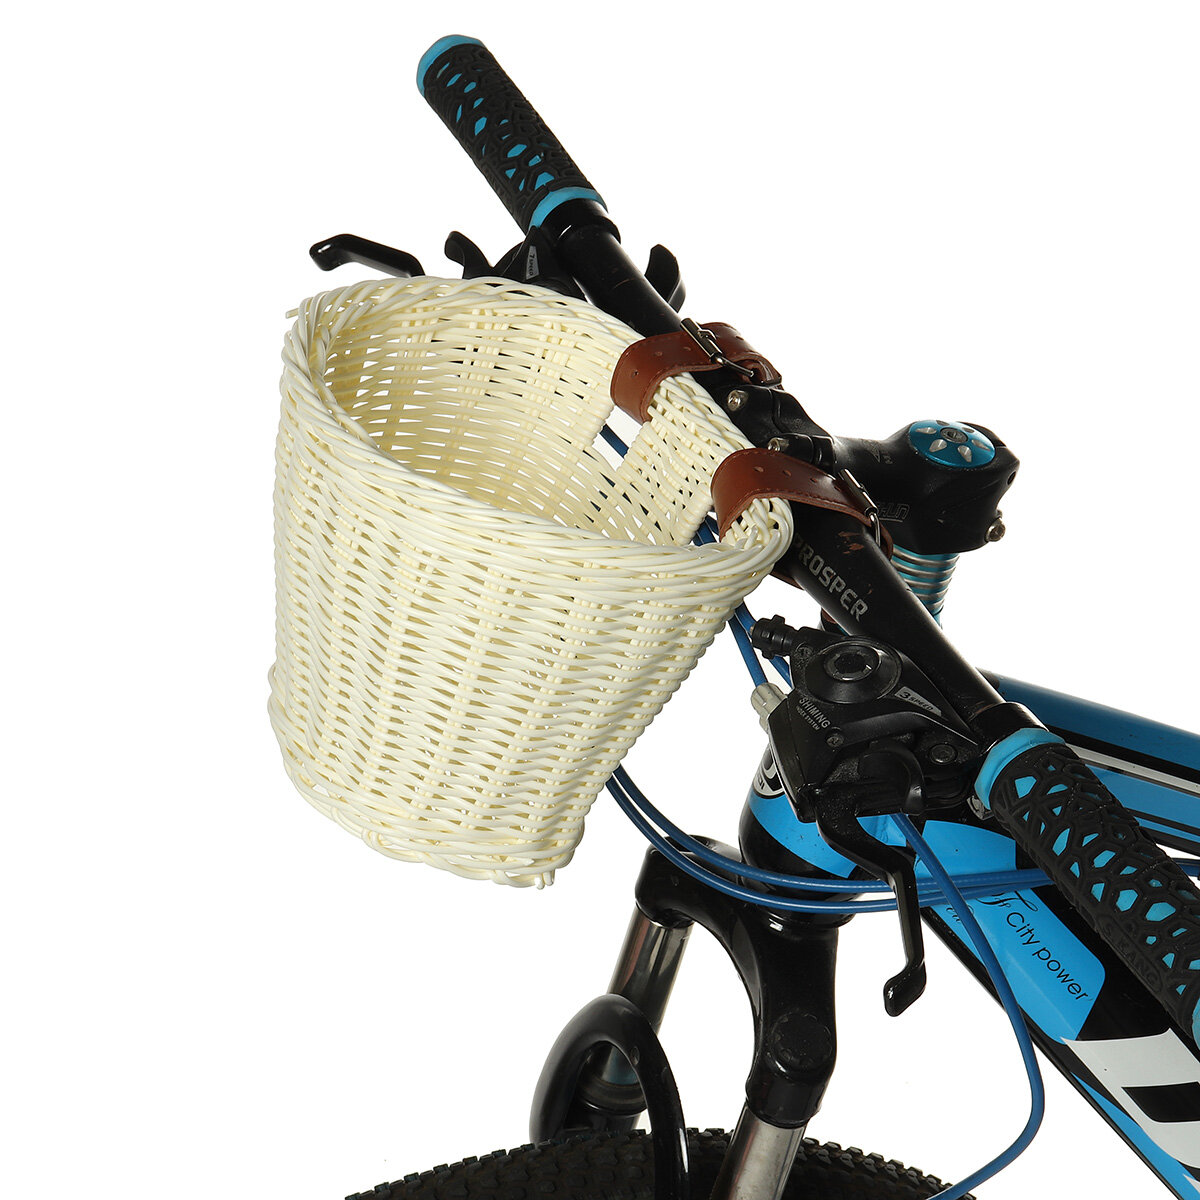 BIKIGHT Kids Children's Rattan Bicycle Bike Front Basket Leather Strap Shopping Storage Case Kids Bike DIY Accessories